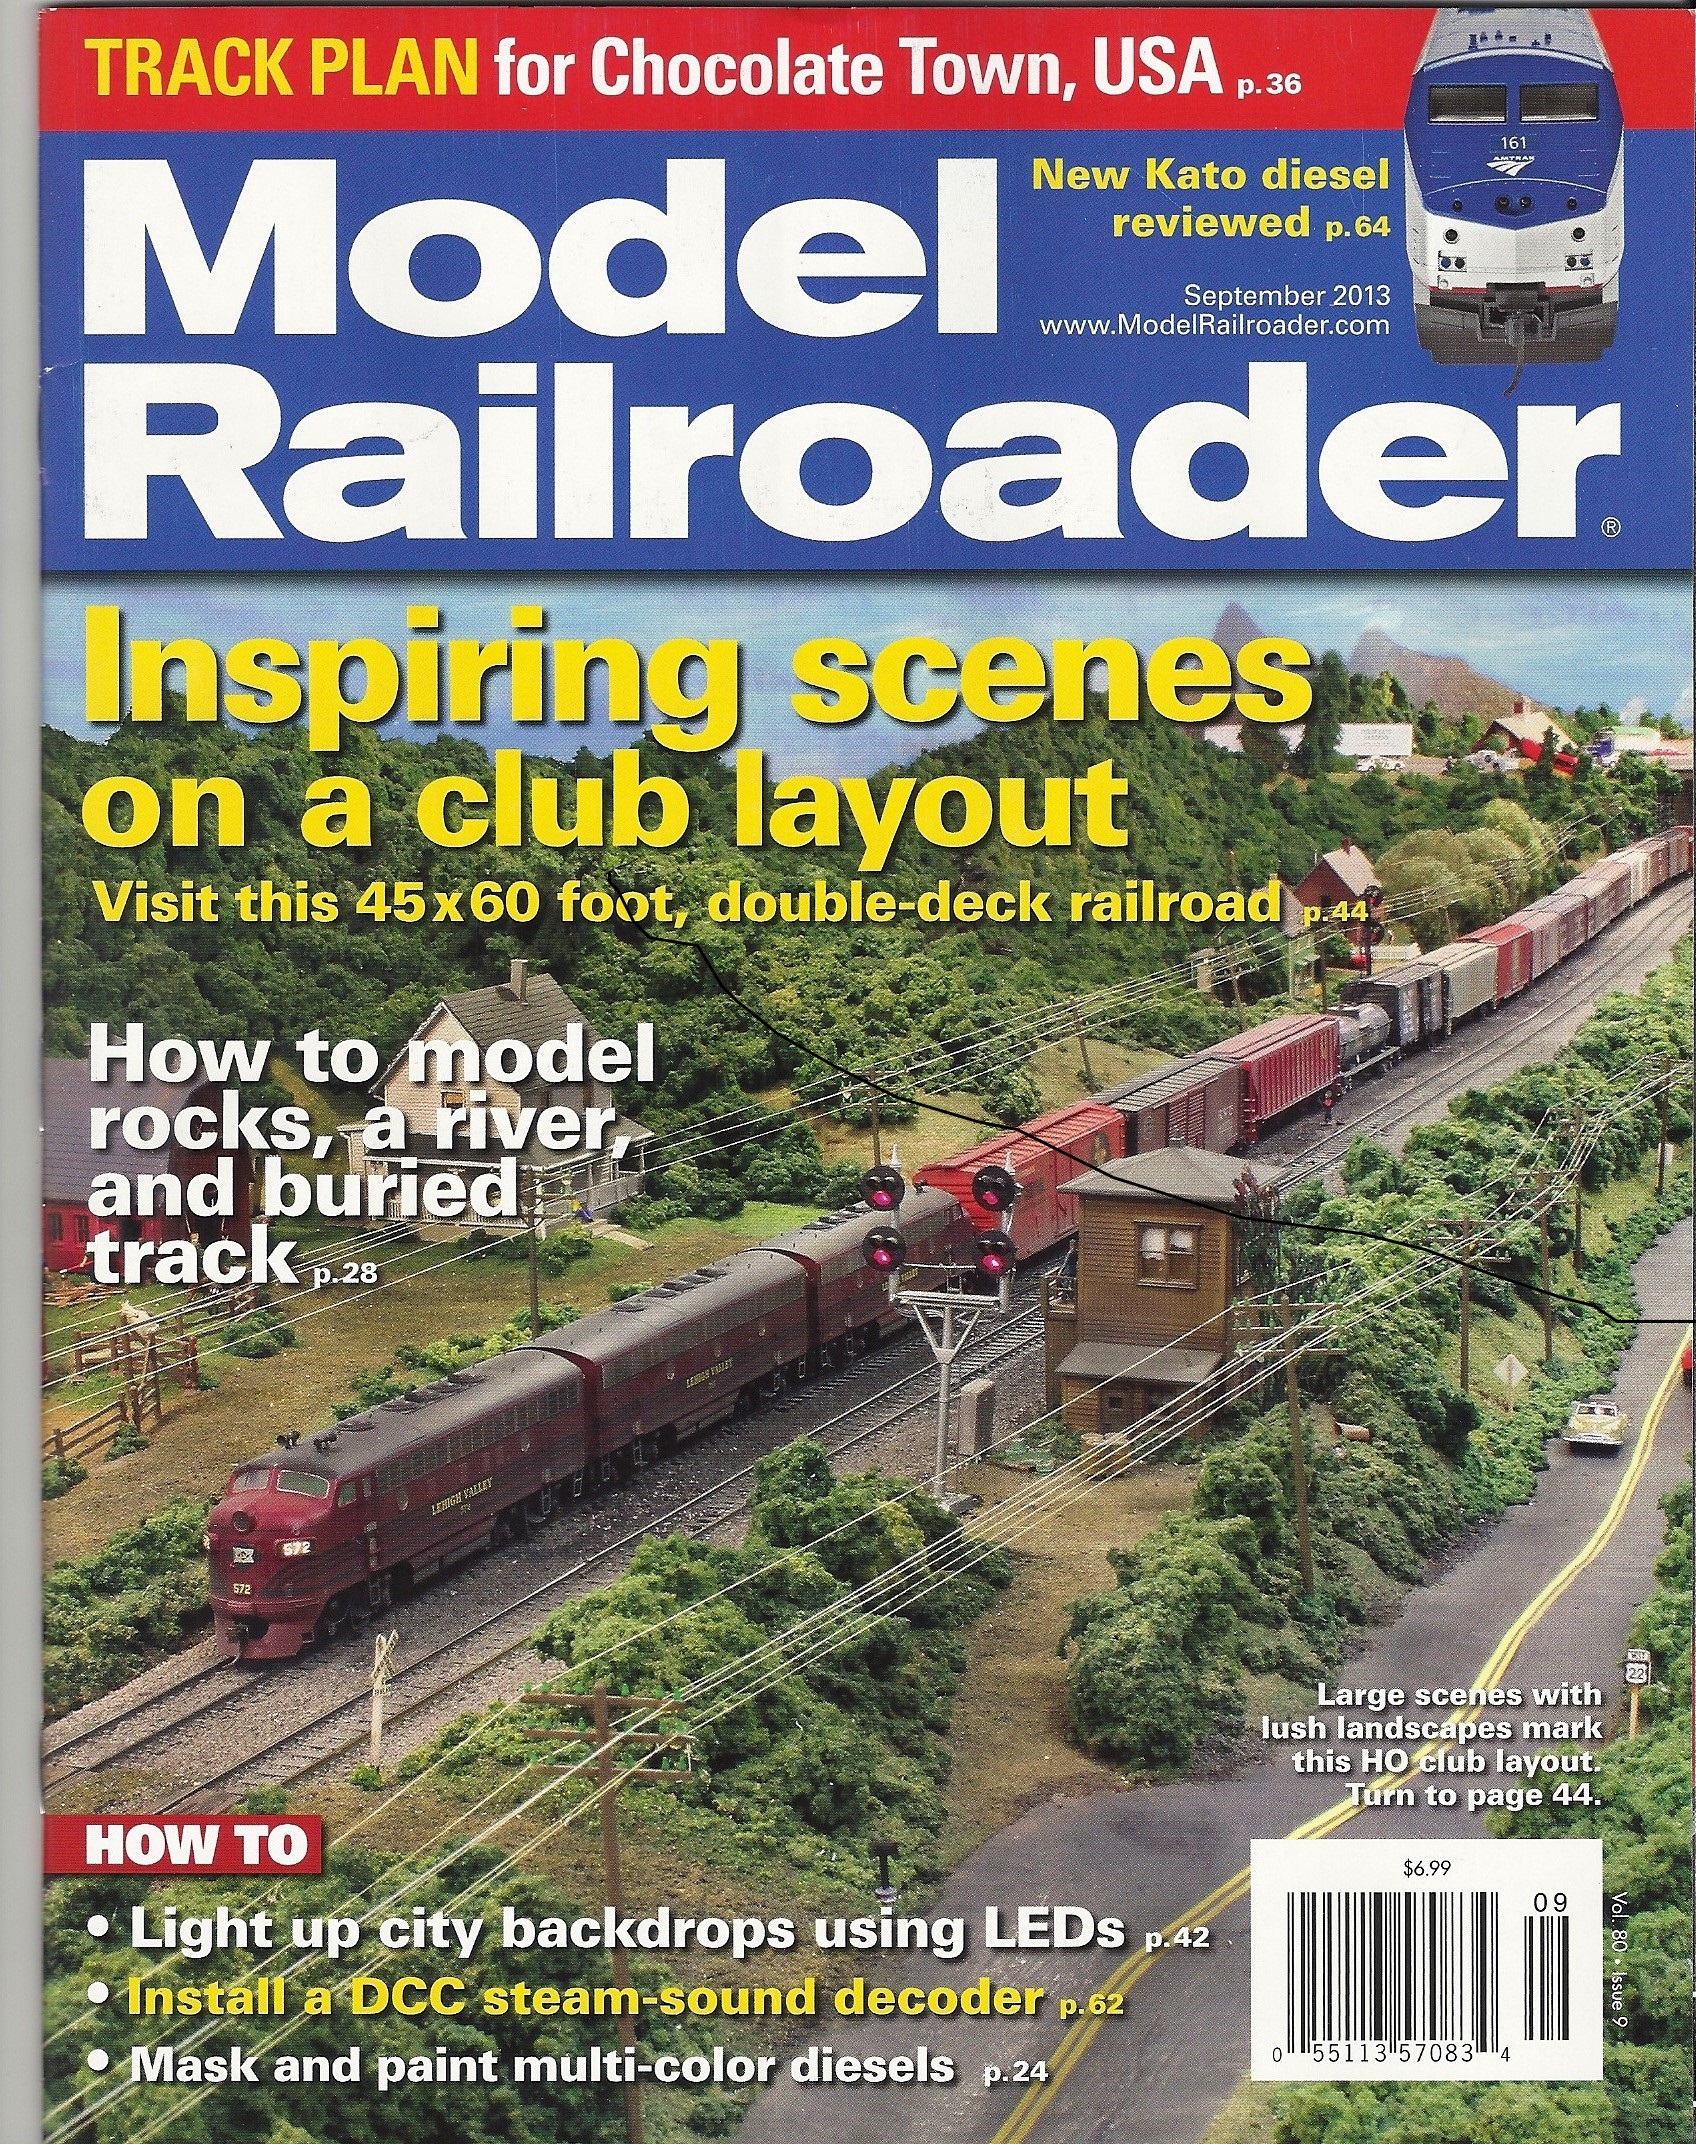 ho model railroad clubs near me